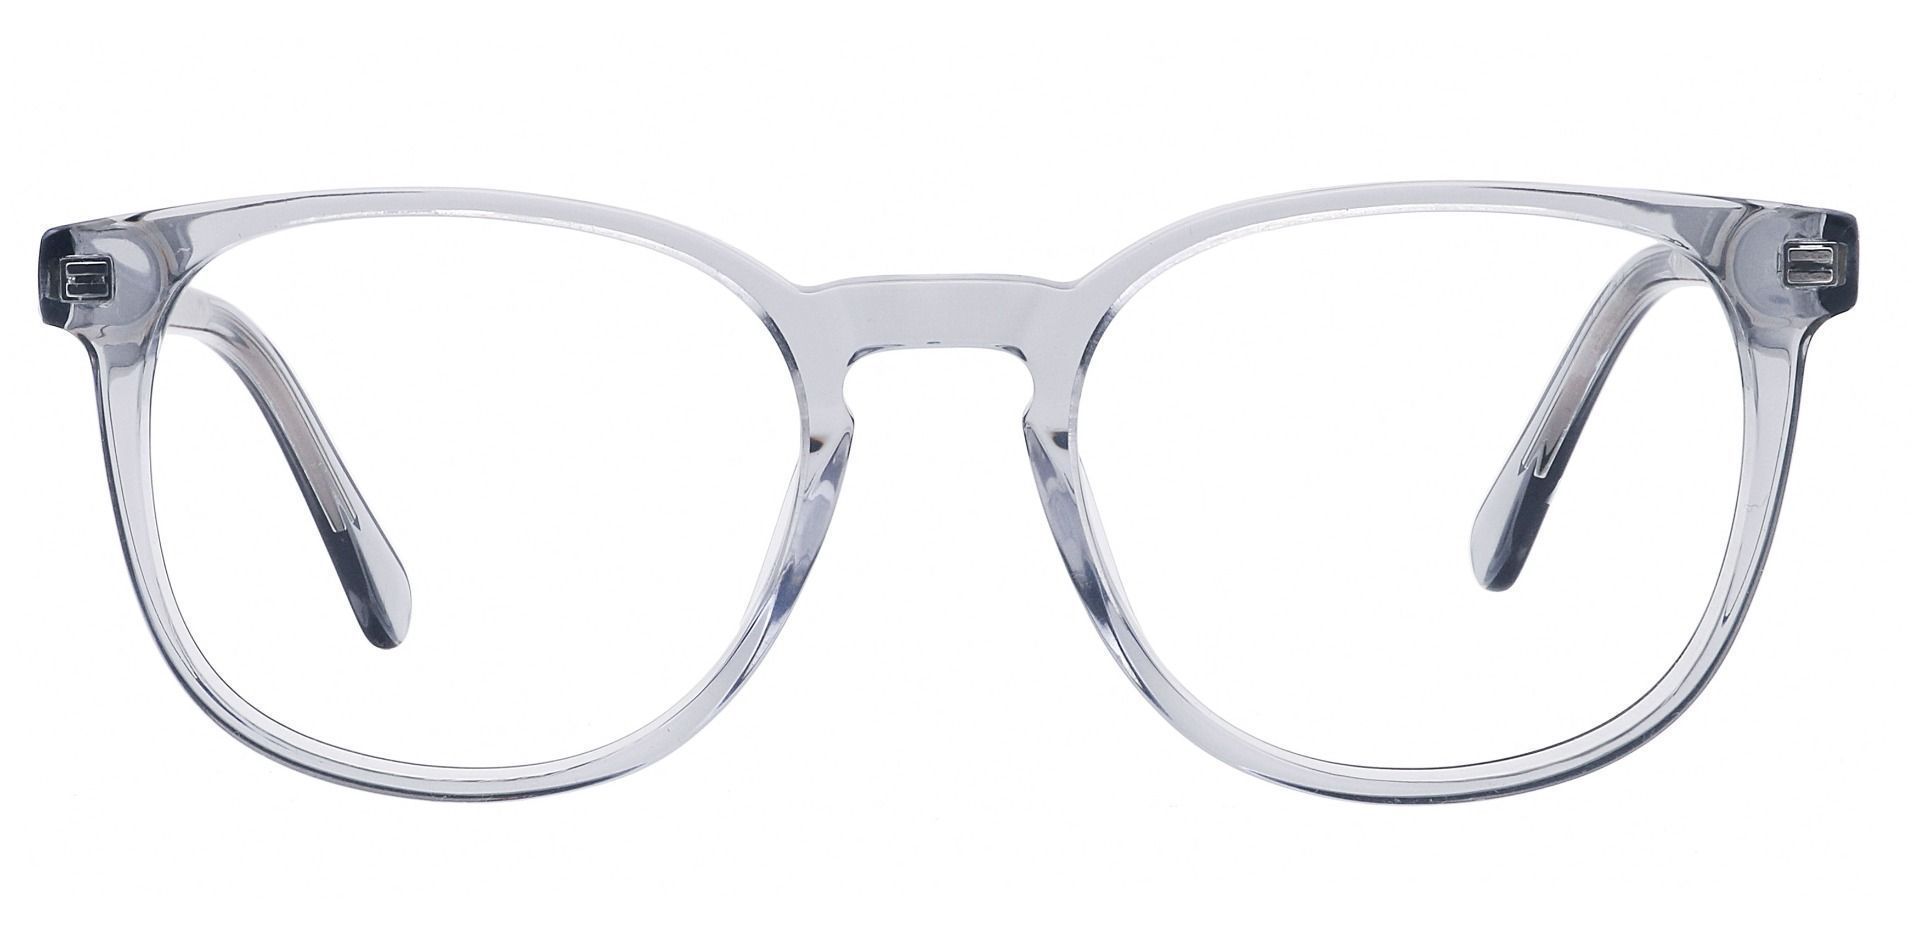 Nebula Round Progressive Glasses - Gray